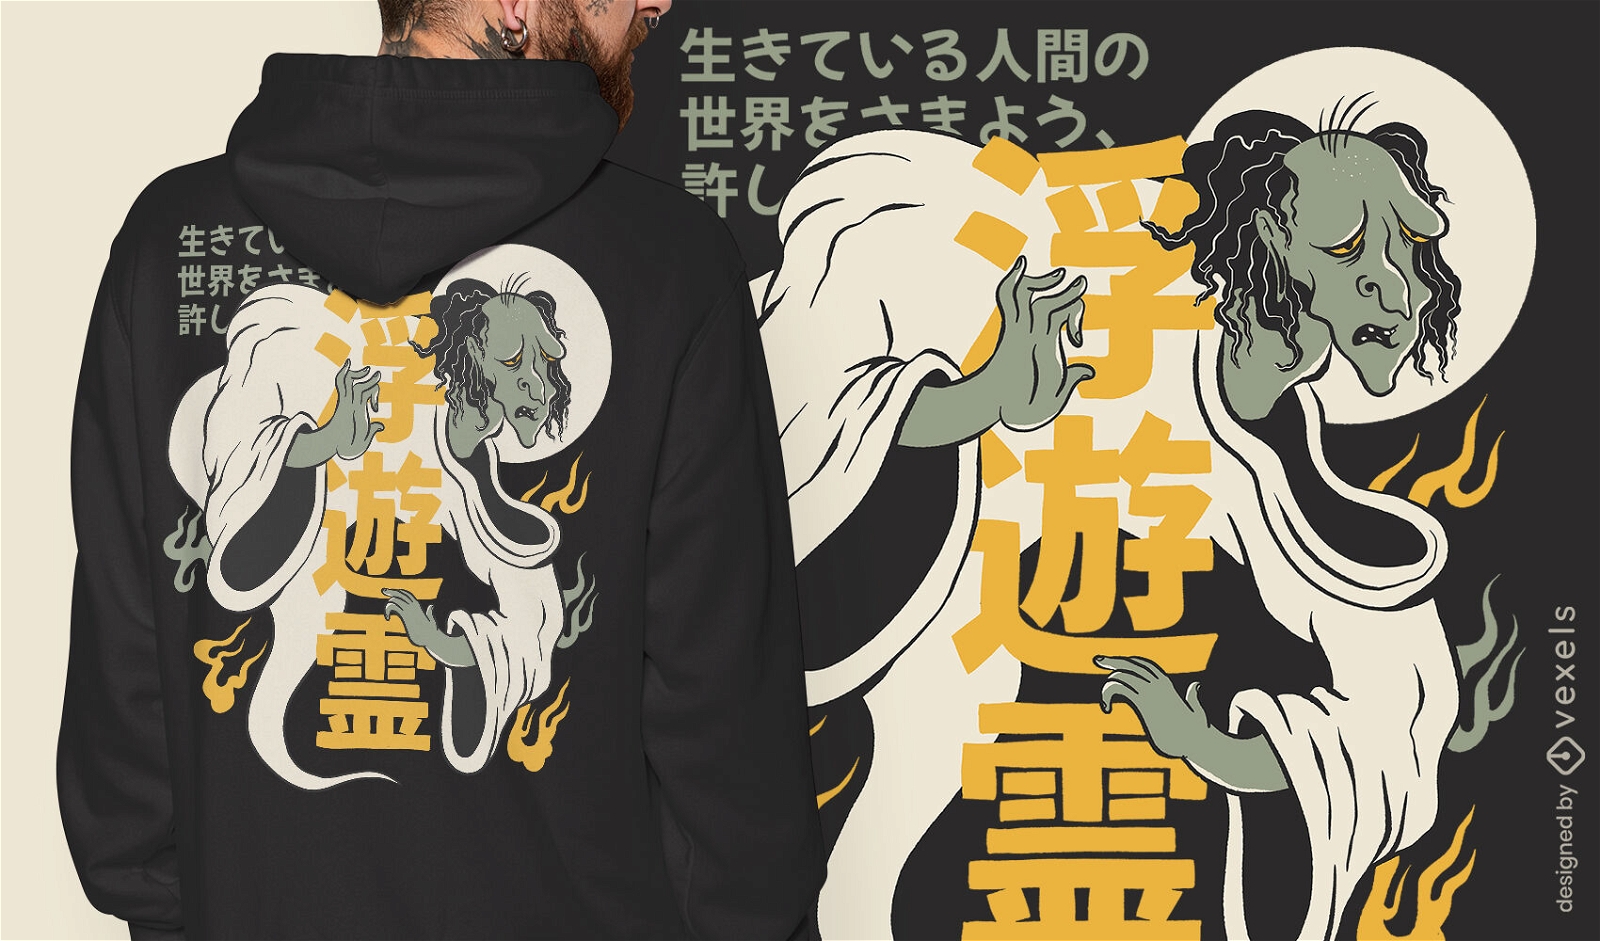 Dise?o de camiseta espeluznante fantasma japon?s